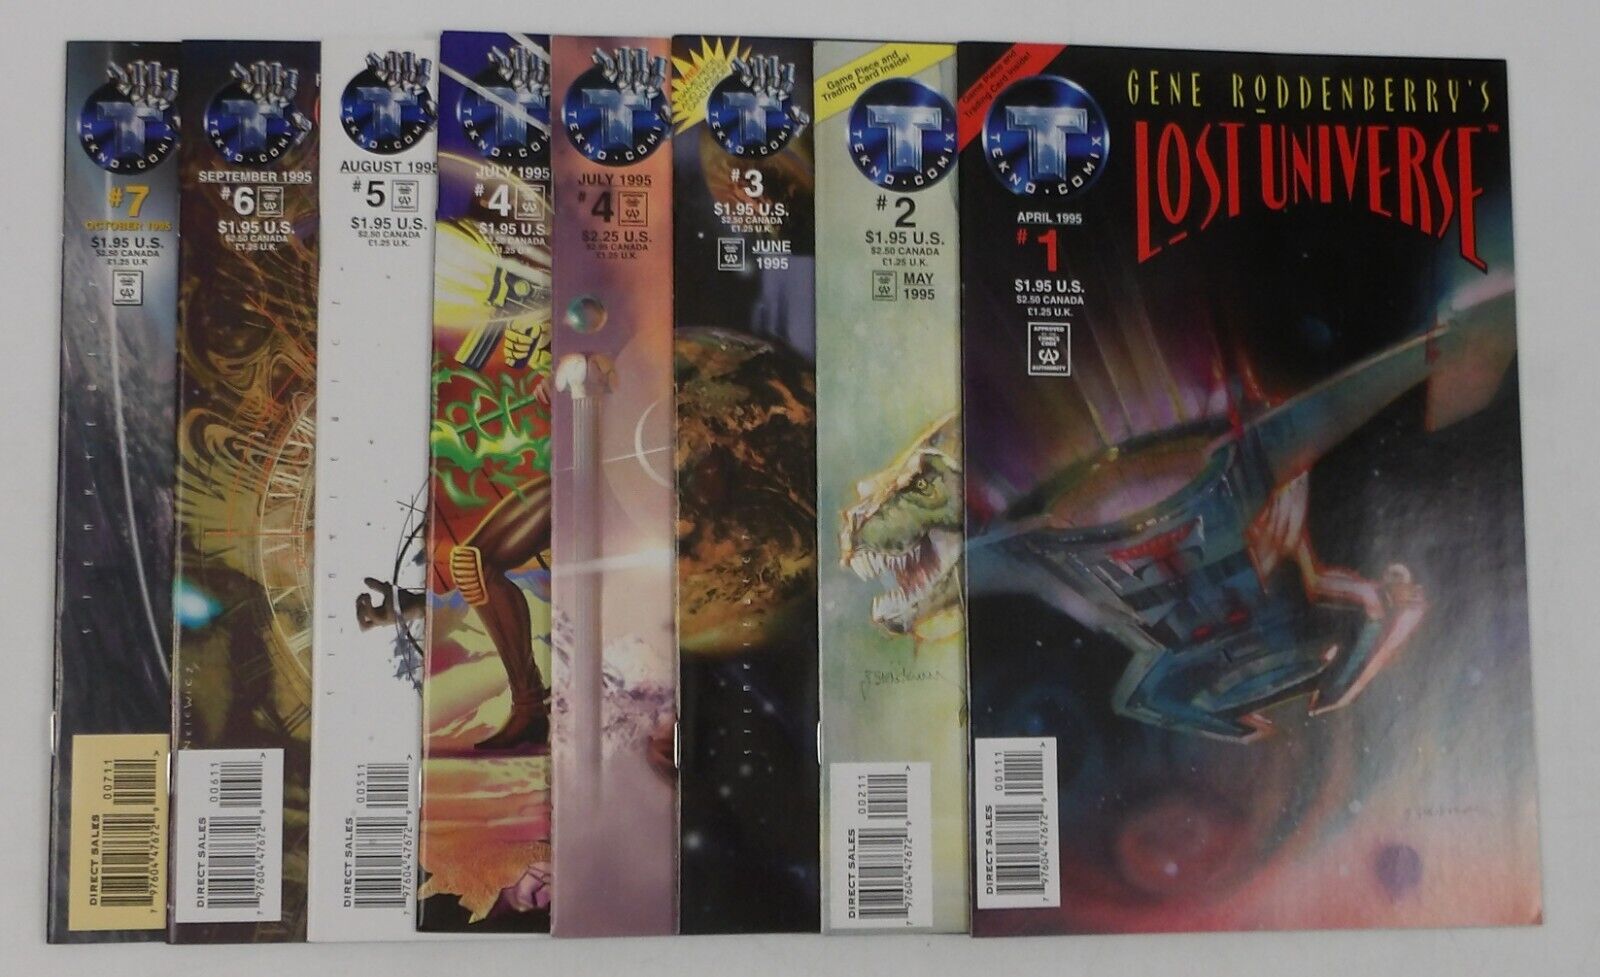 Gene Roddenberry's Lost Universe 1-7 VF/NM complete series + variant - Tekno set